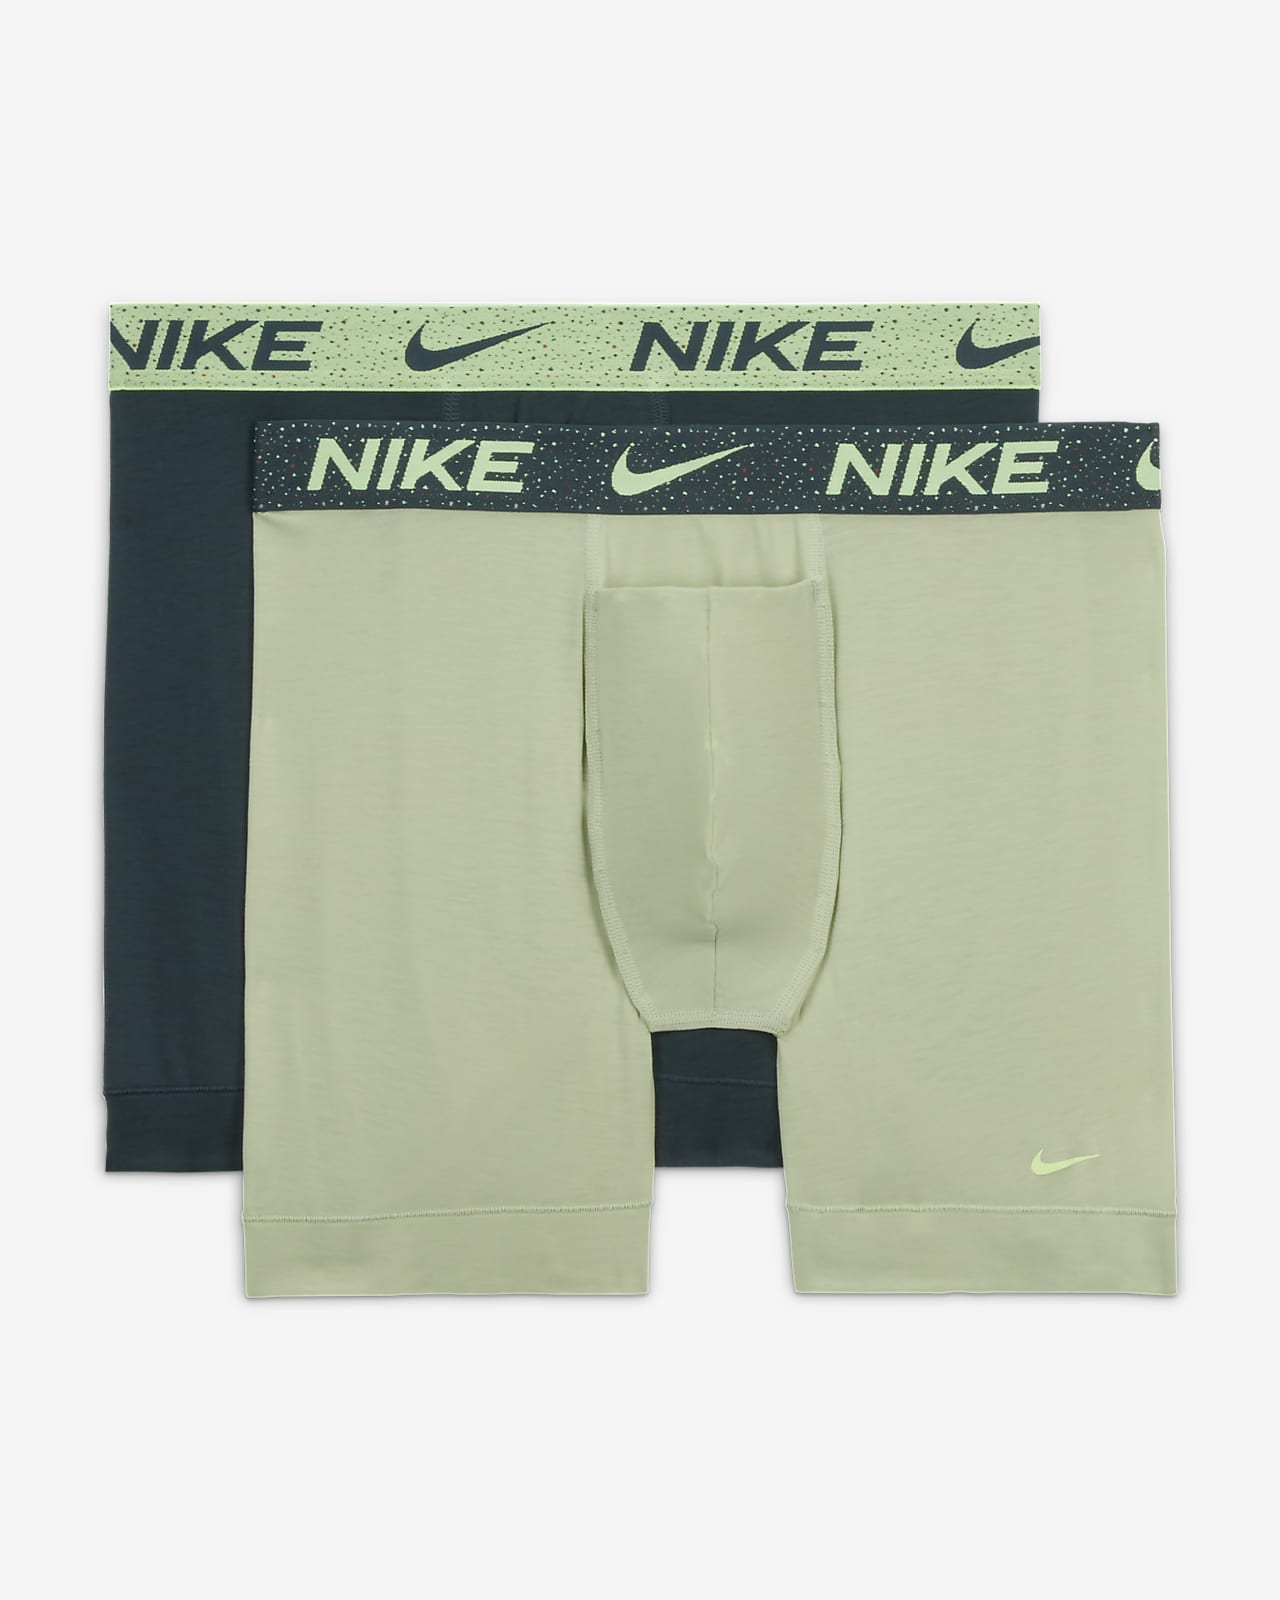 Nike Men's Everyday Dri-FIT Cotton Boxer Briefs (University Red